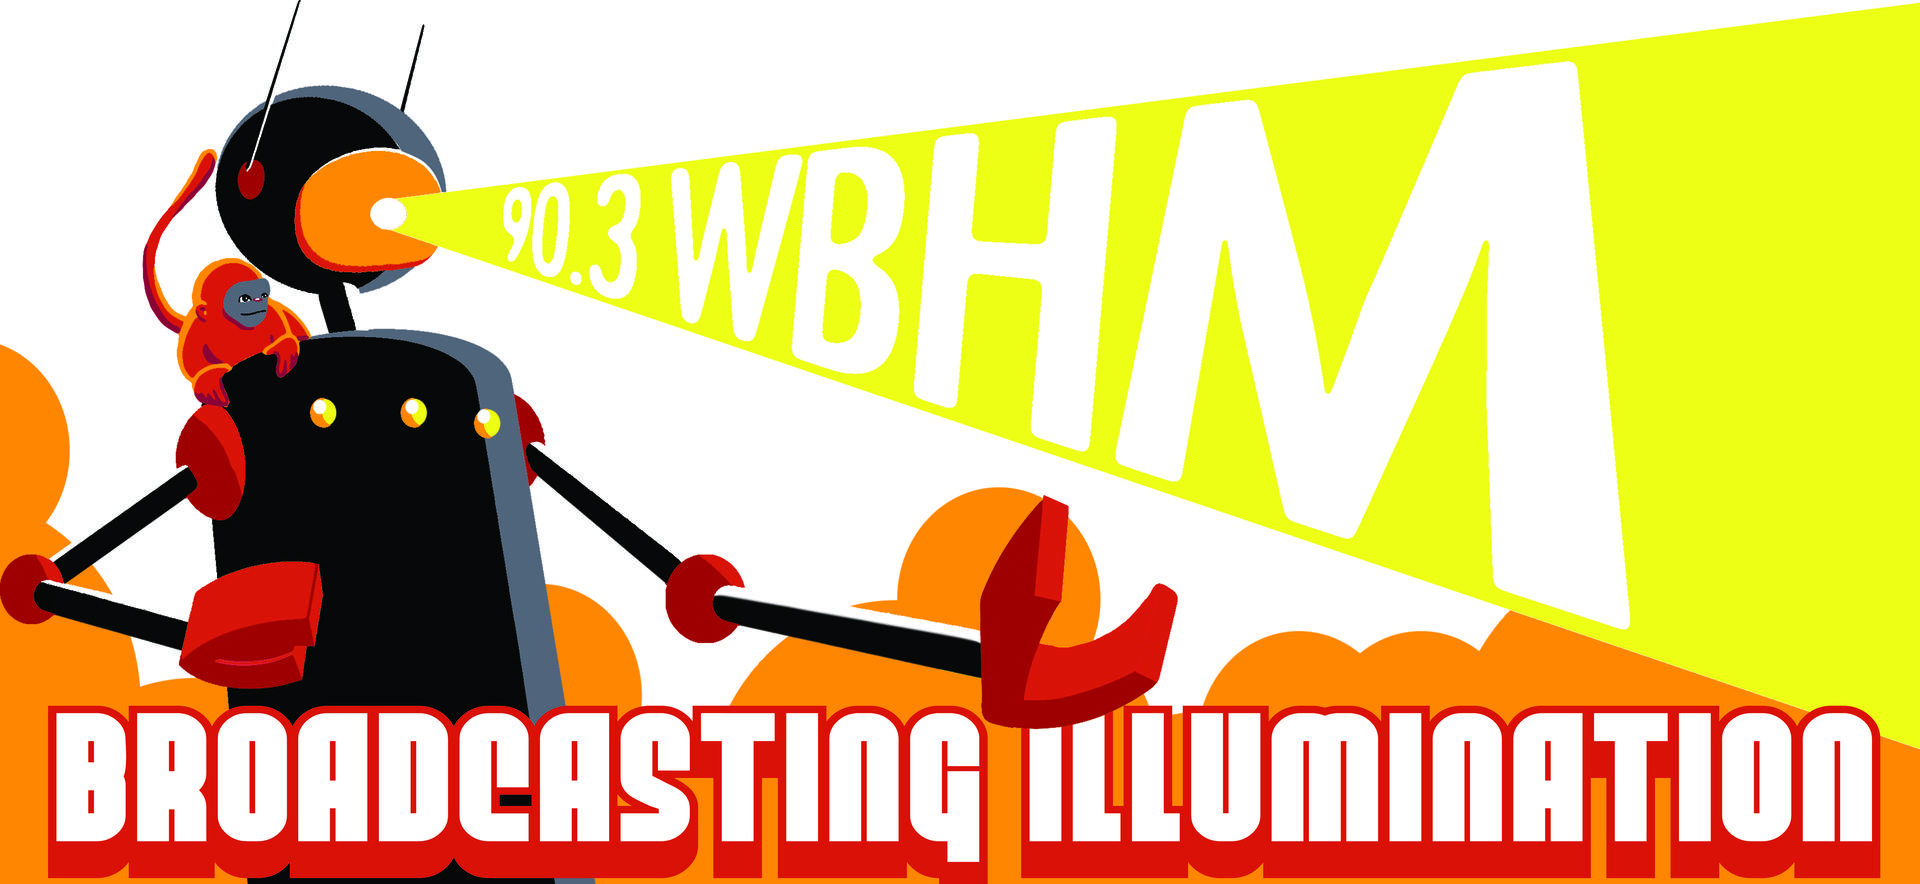 "Broadcasting Illumination" by John Lytle Wilson, Fall 2014